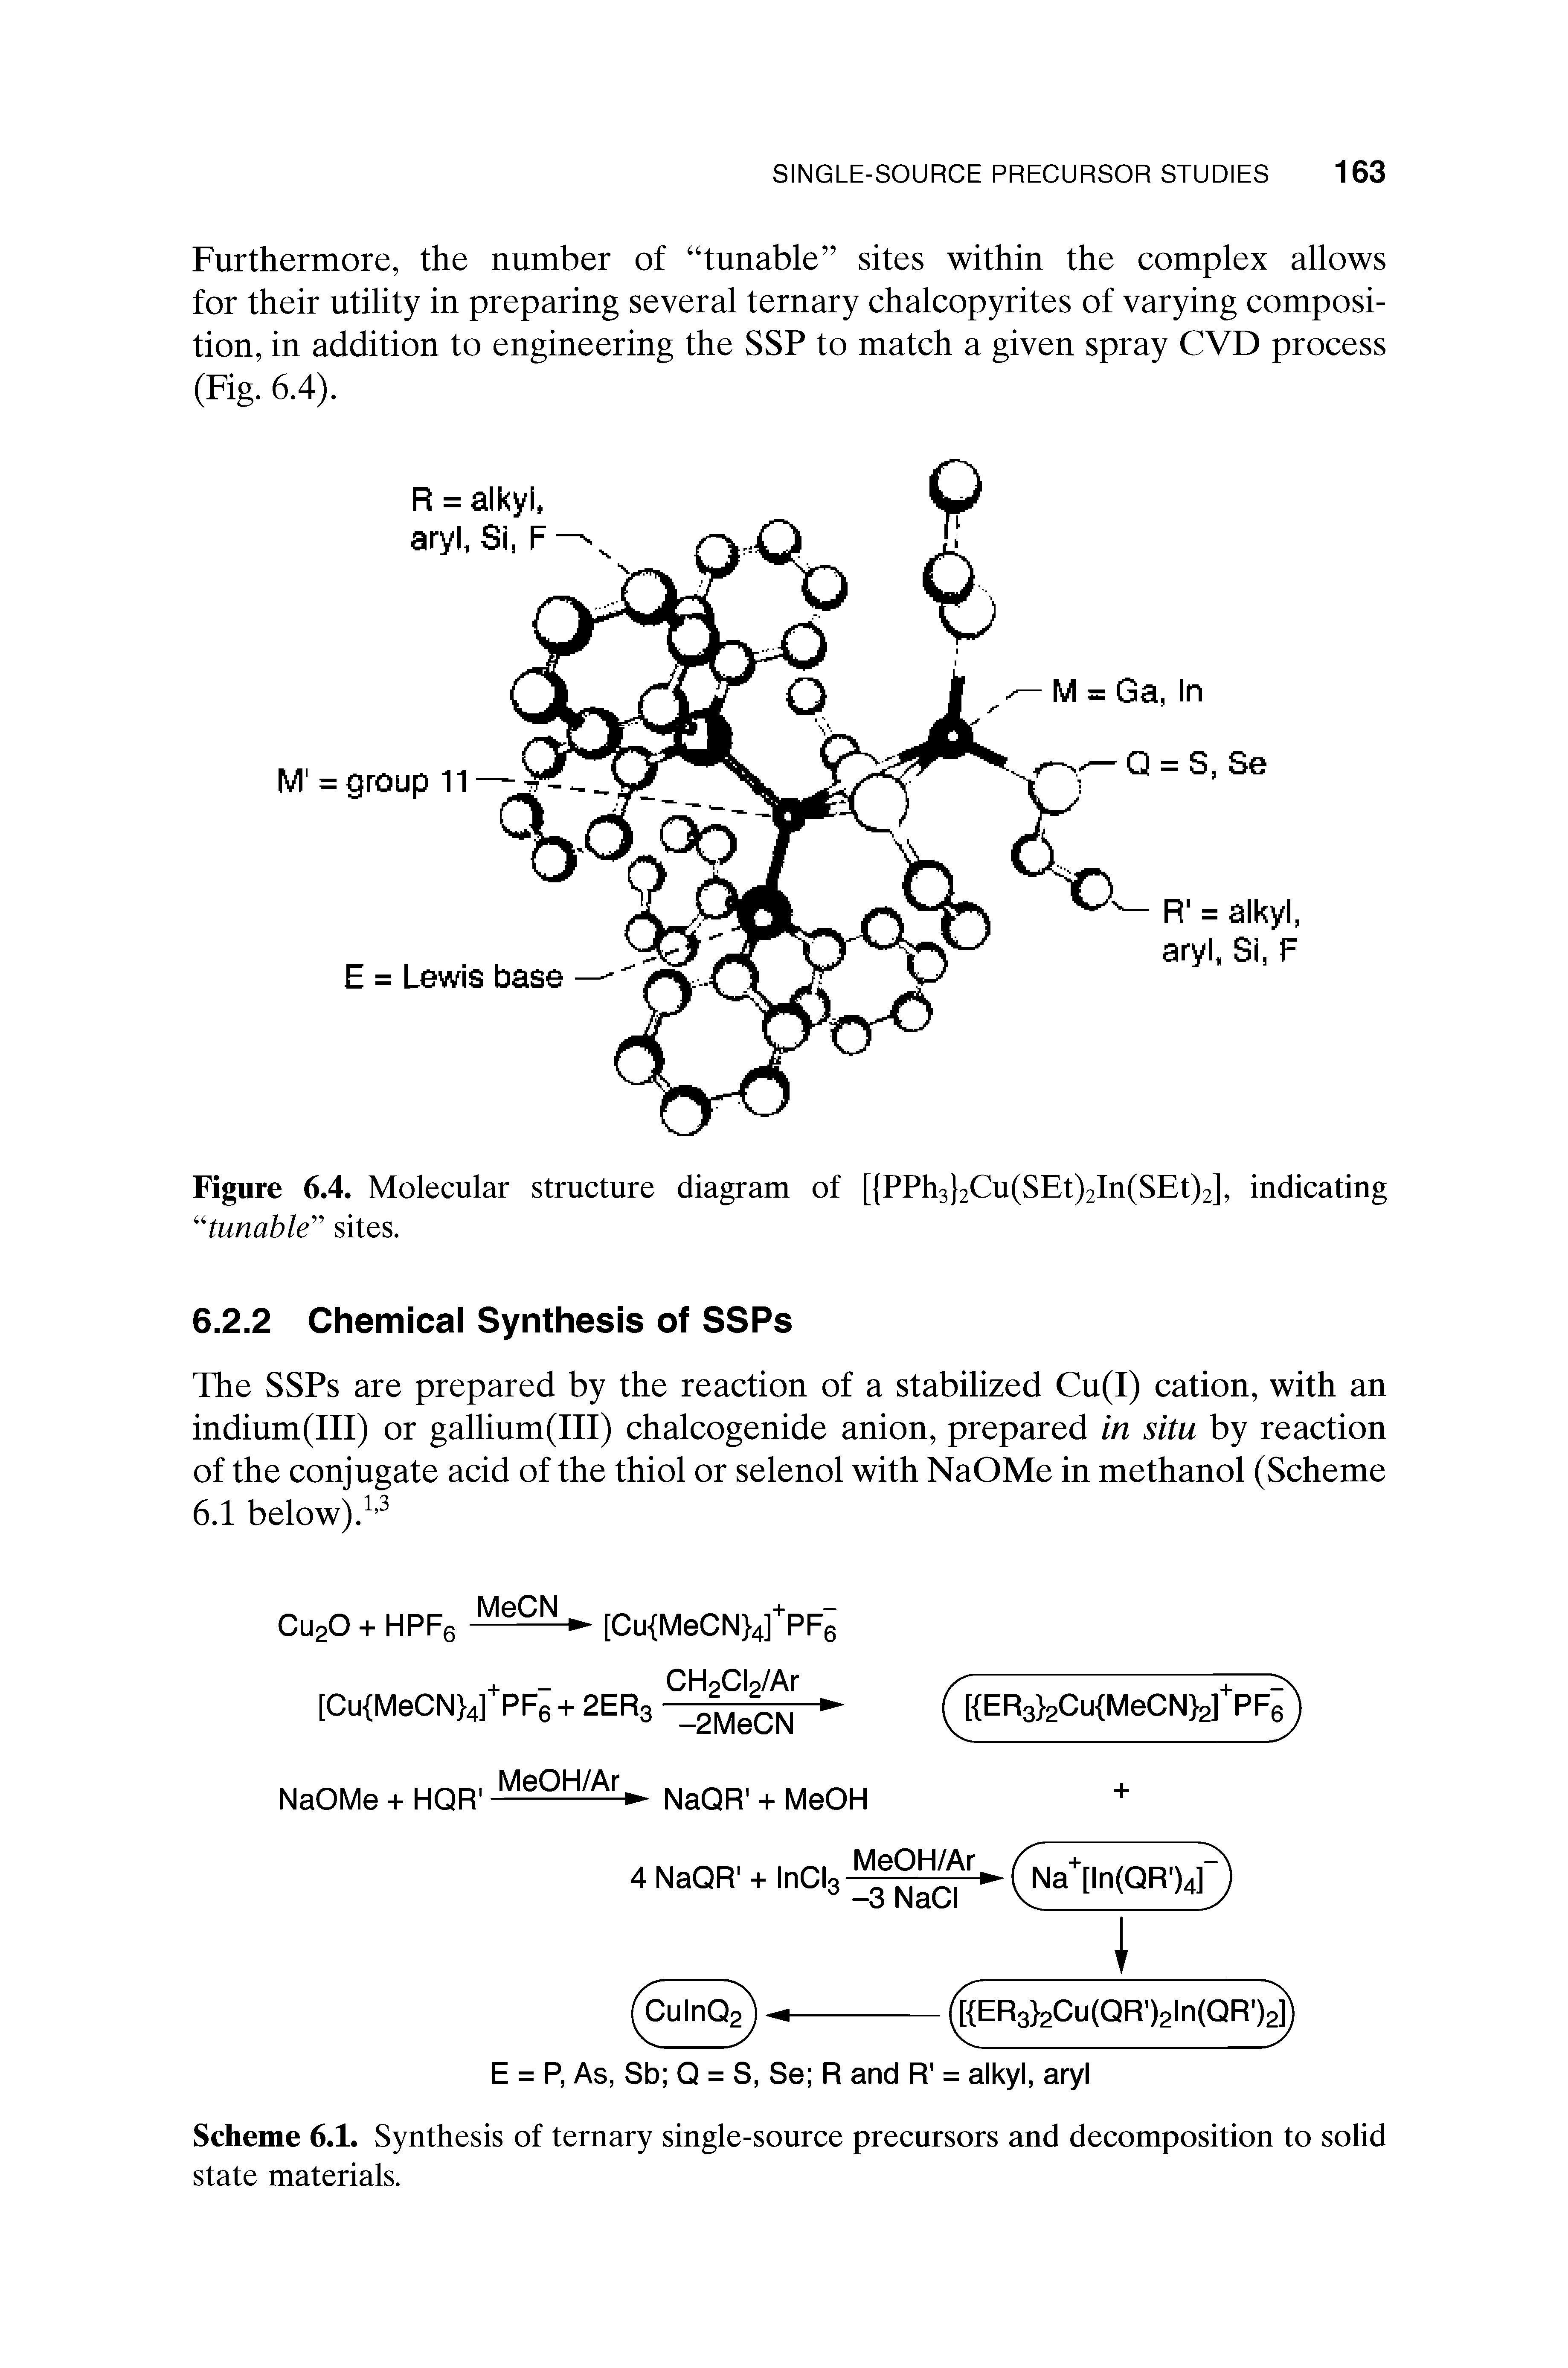 Figure 6.4. Molecular structure diagram of [ PPh3 2Cu(SEt)2ln(SEt)2], indicating tunable sites.